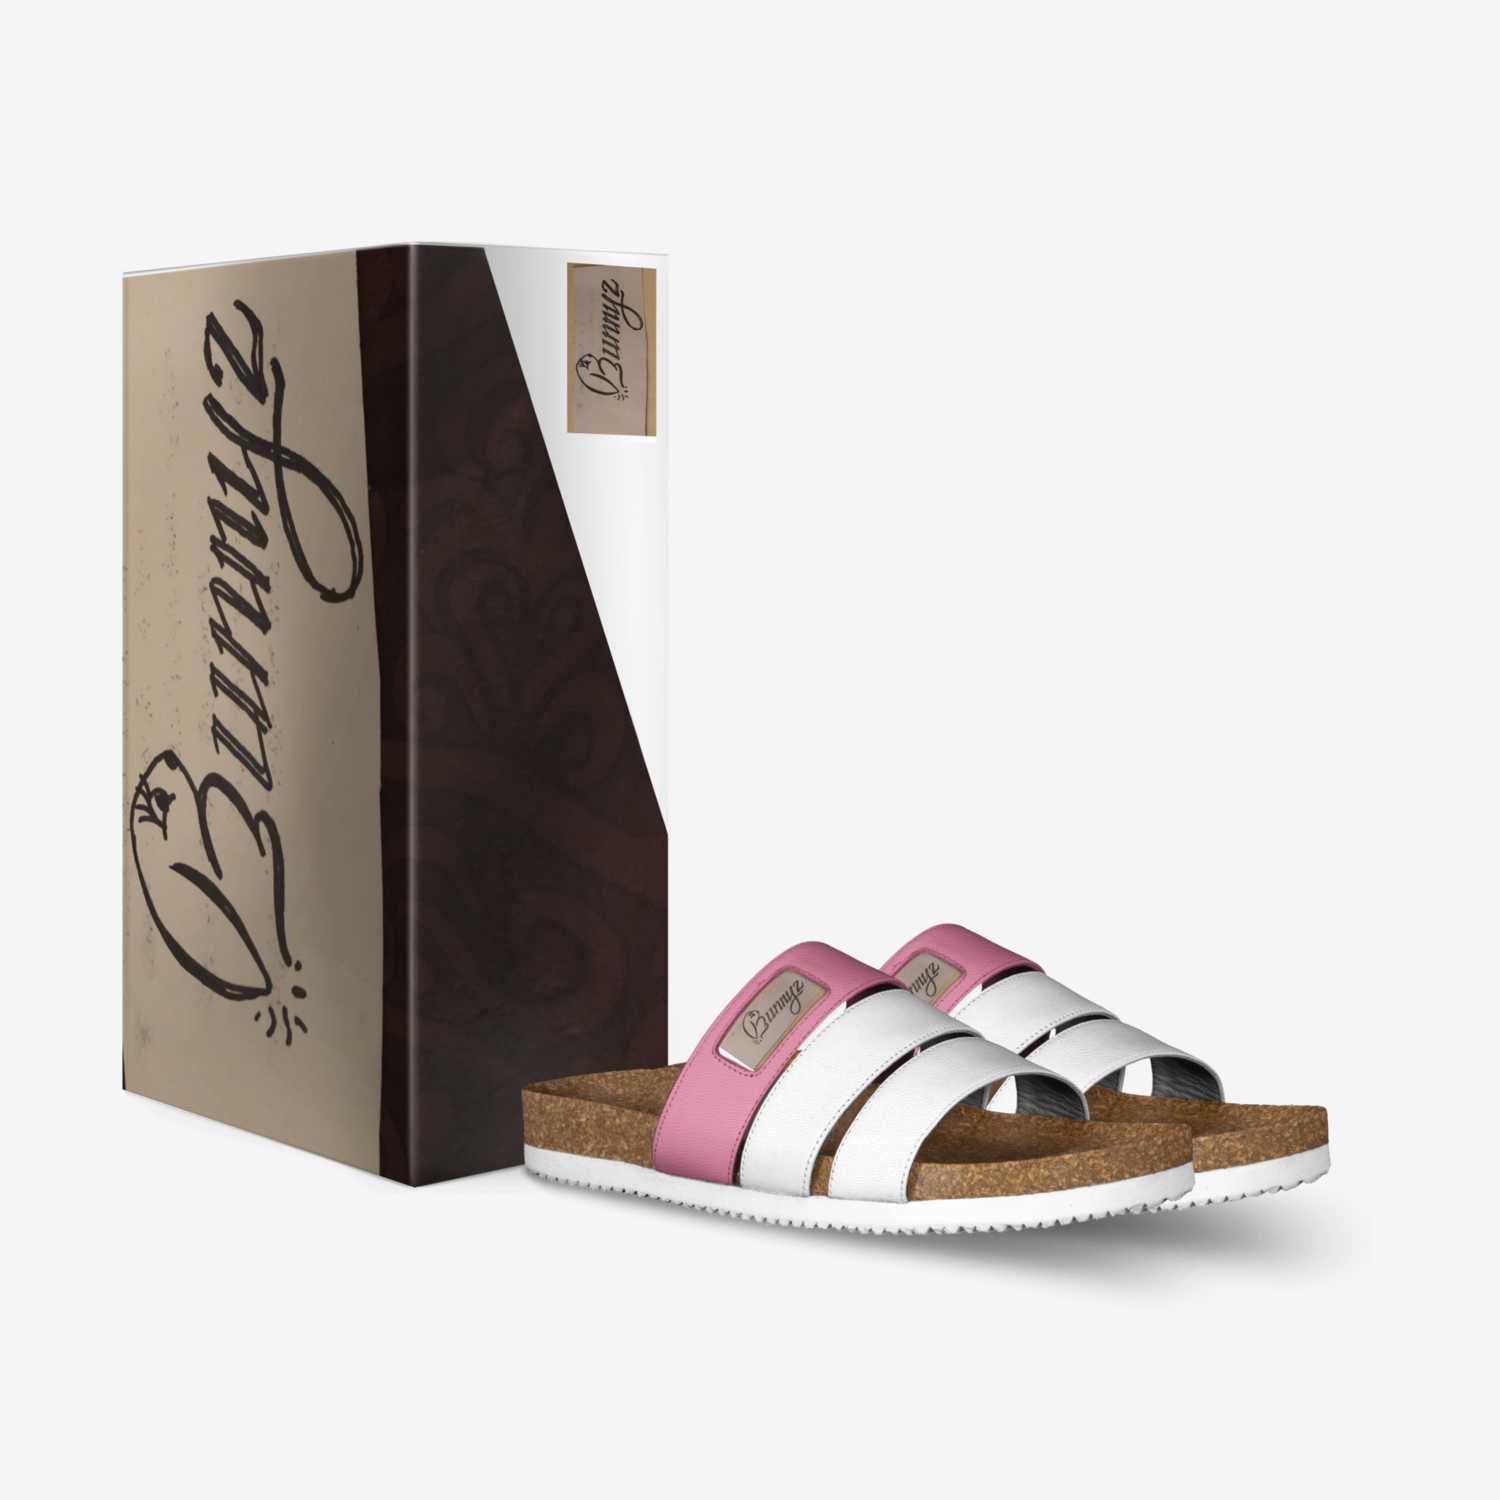 Bunnyz custom made in Italy shoes by Elana | Box view